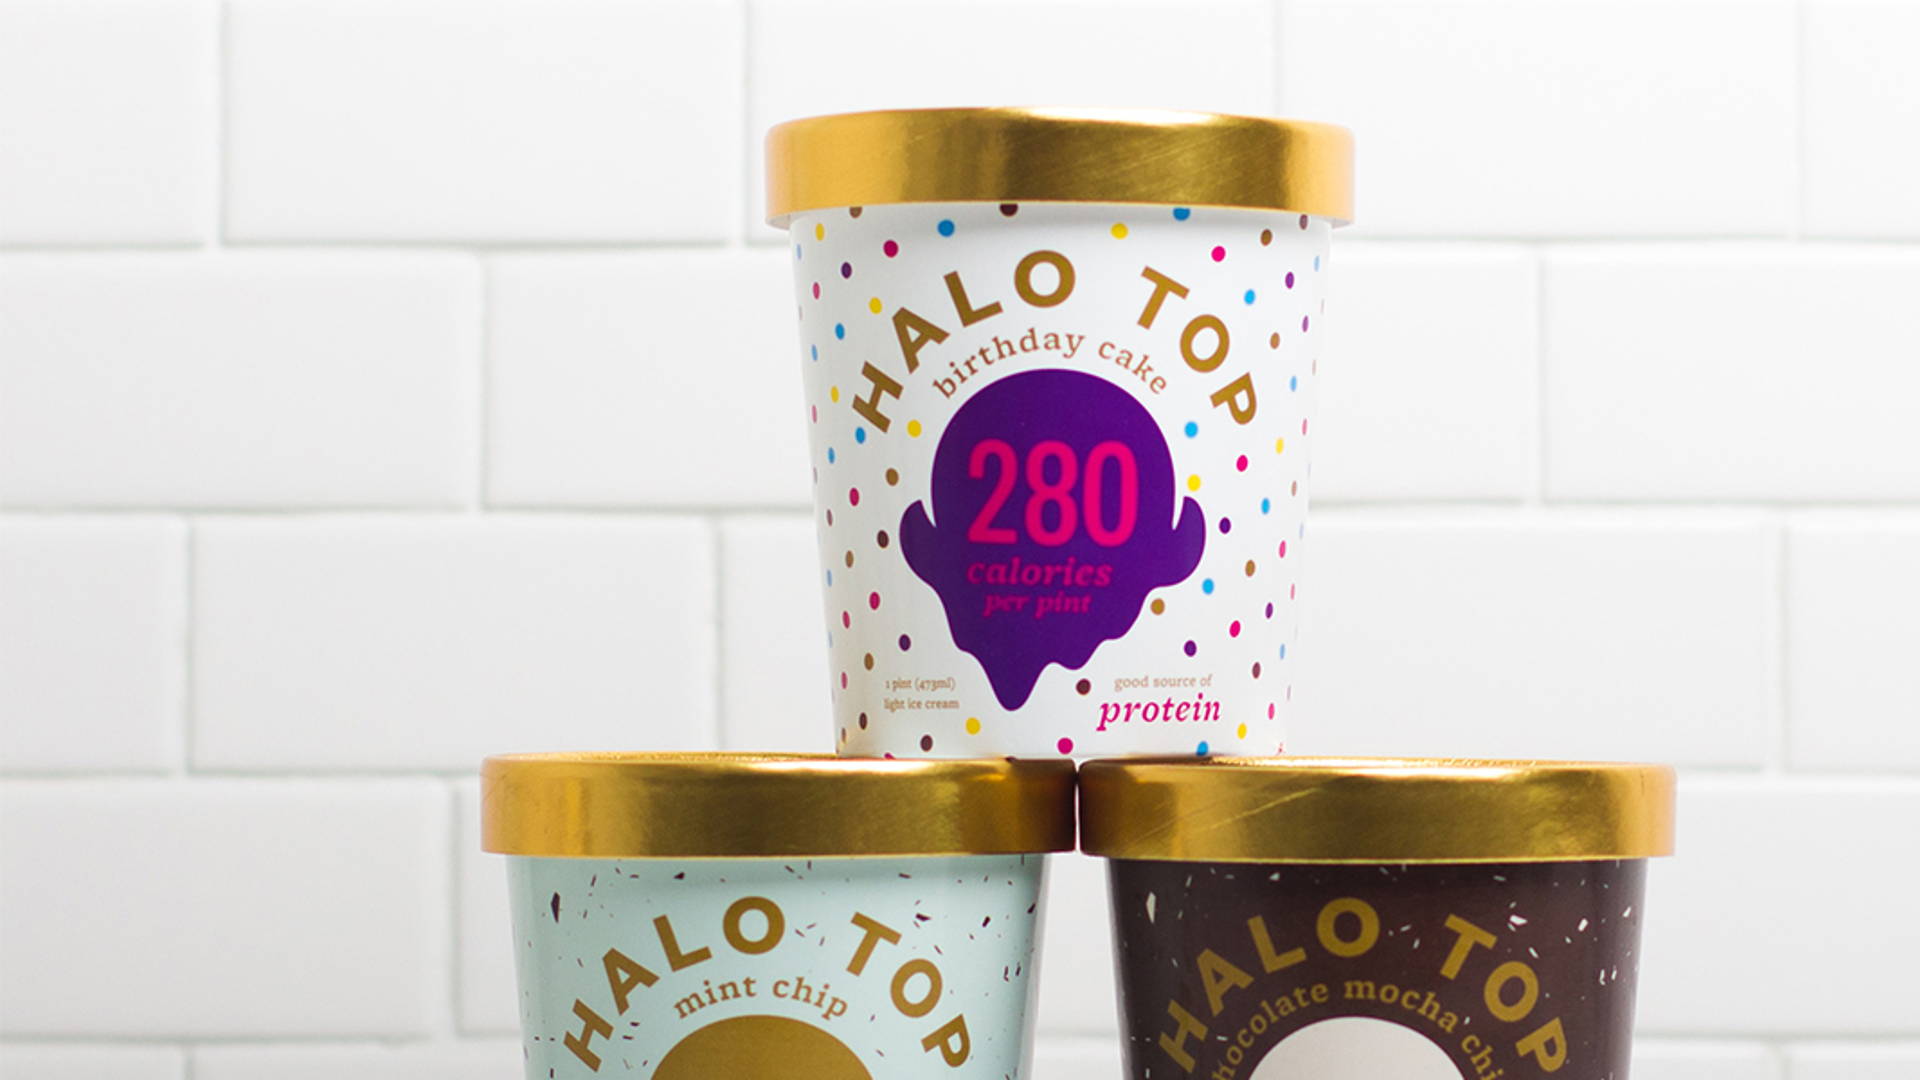 Halo Top Ice Cream | Dieline - Design, Branding & Packaging Inspiration